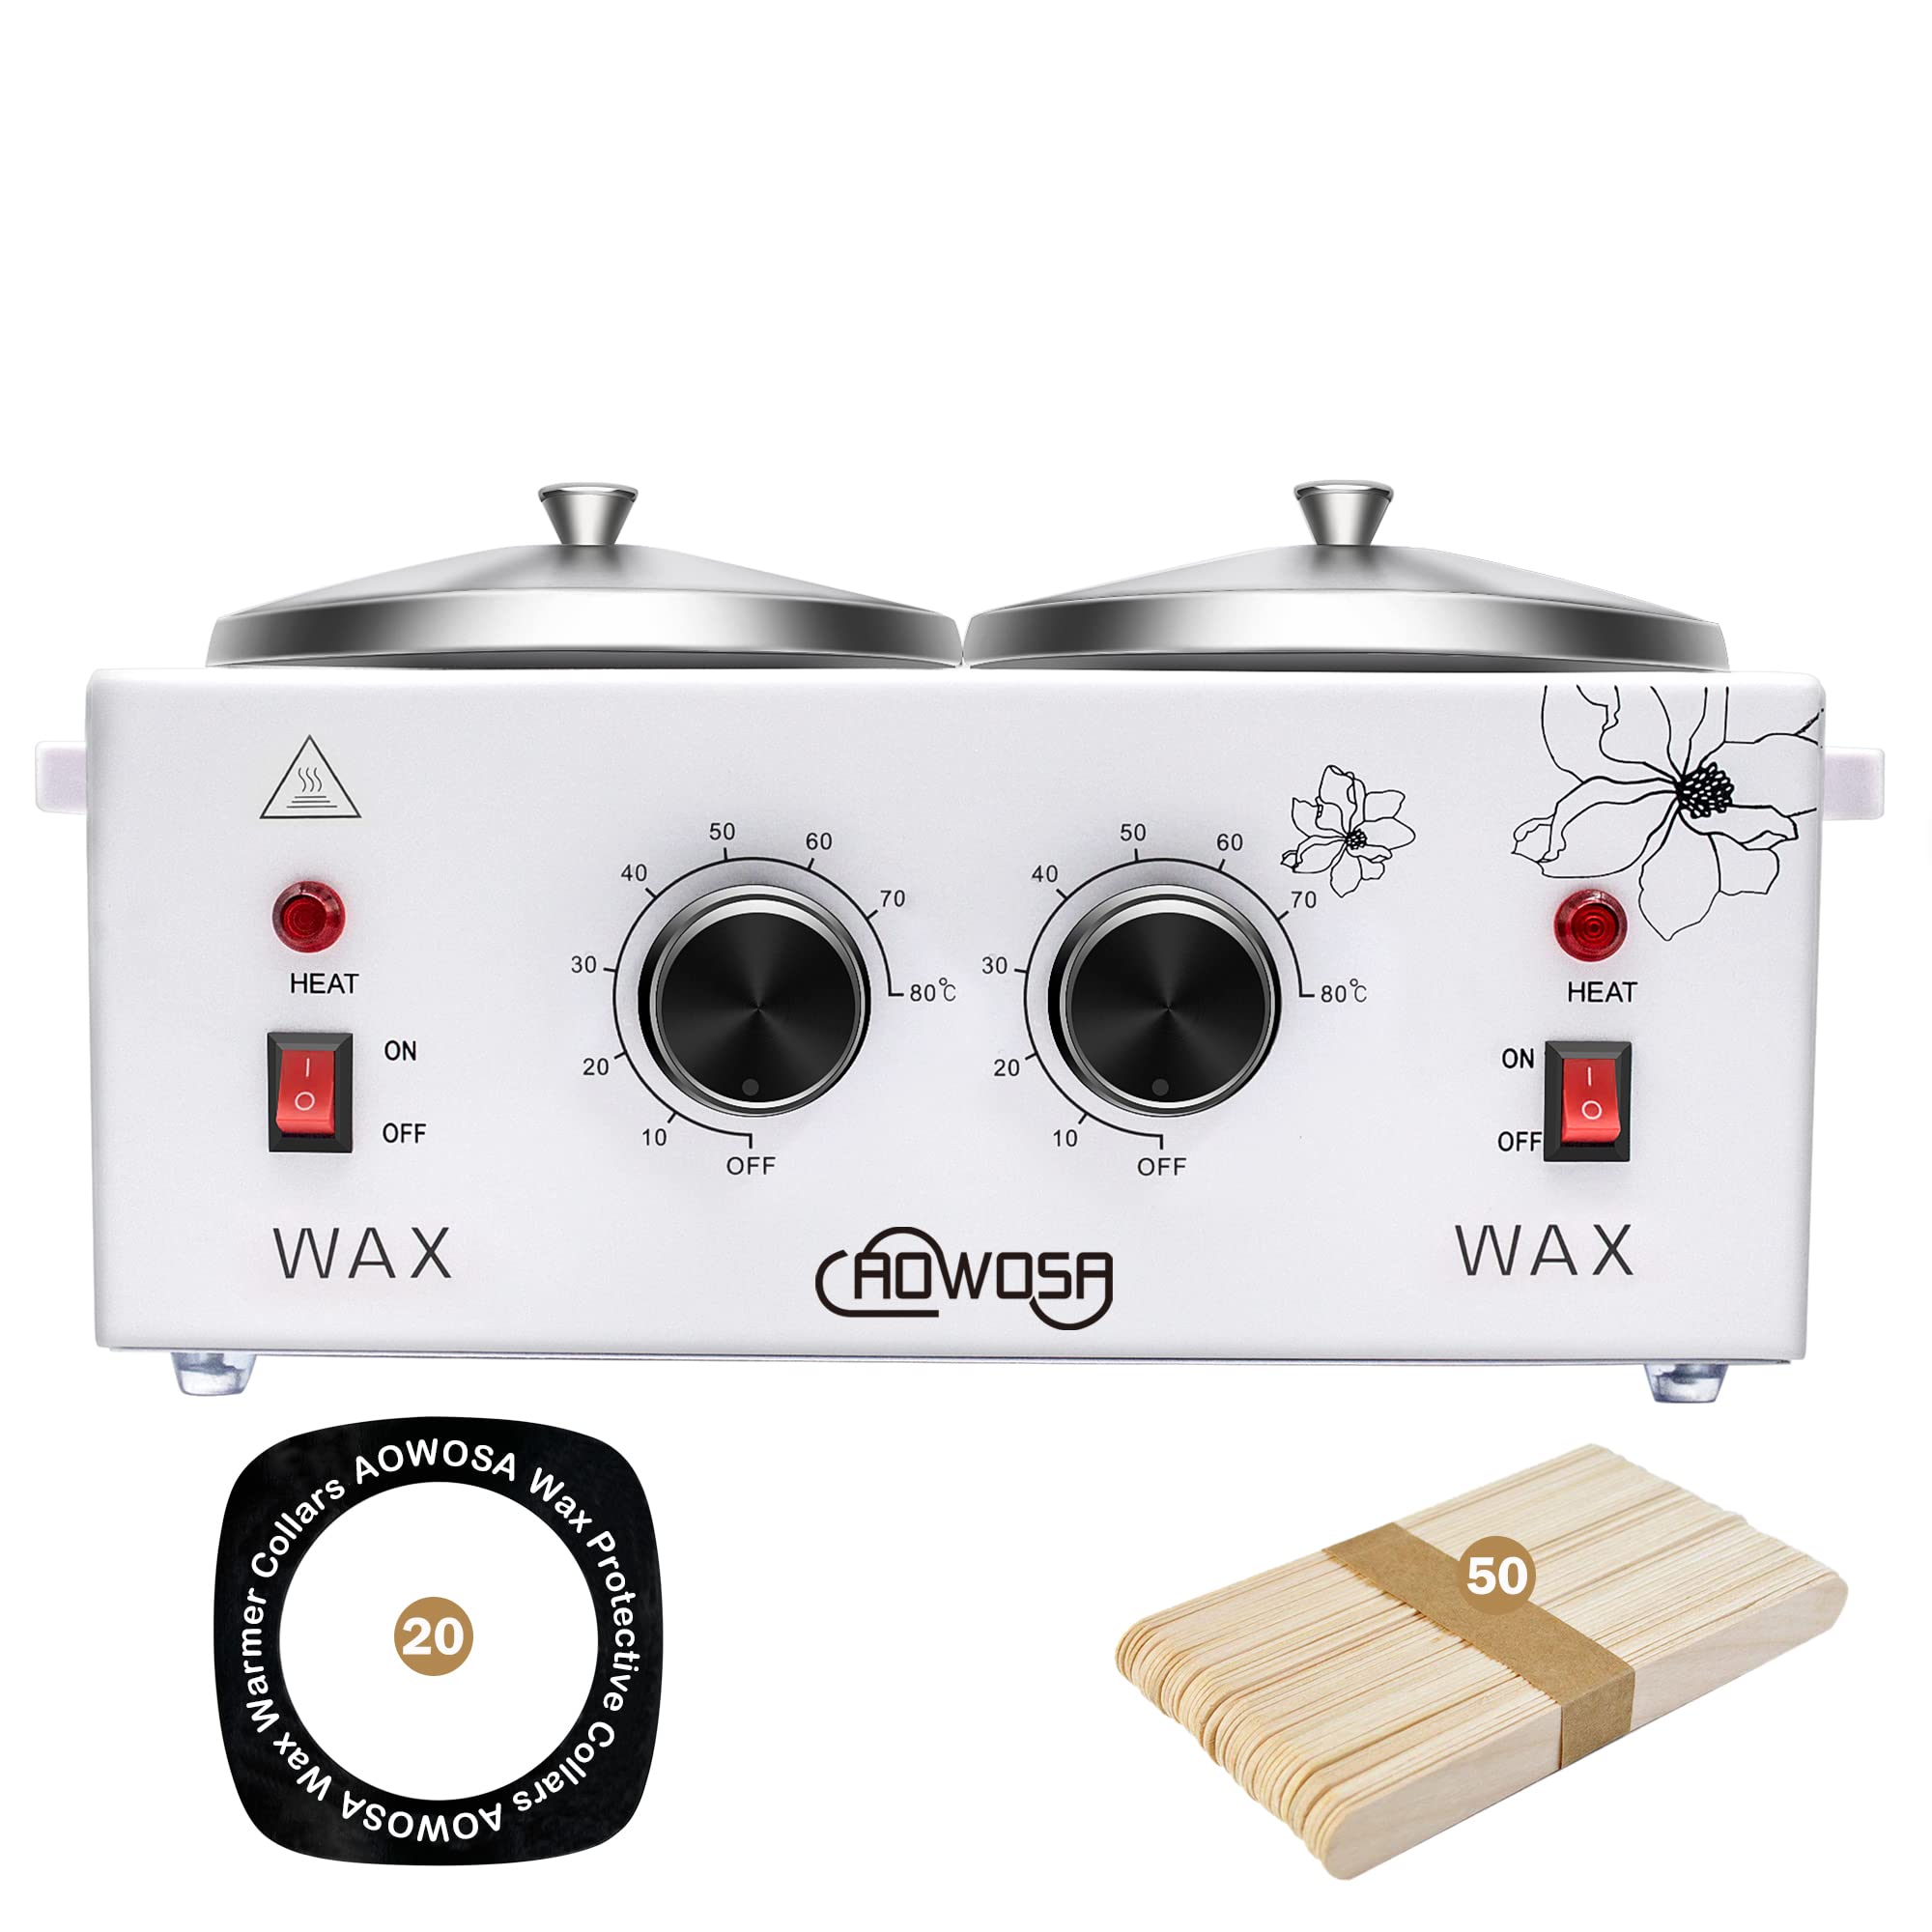 AOWOSA Double Wax Warmer Professional Electric Wax Heater Machine for Hair Removal, Dual Wax Pot Paraffin Facial Skin Body SPA Salon Eq